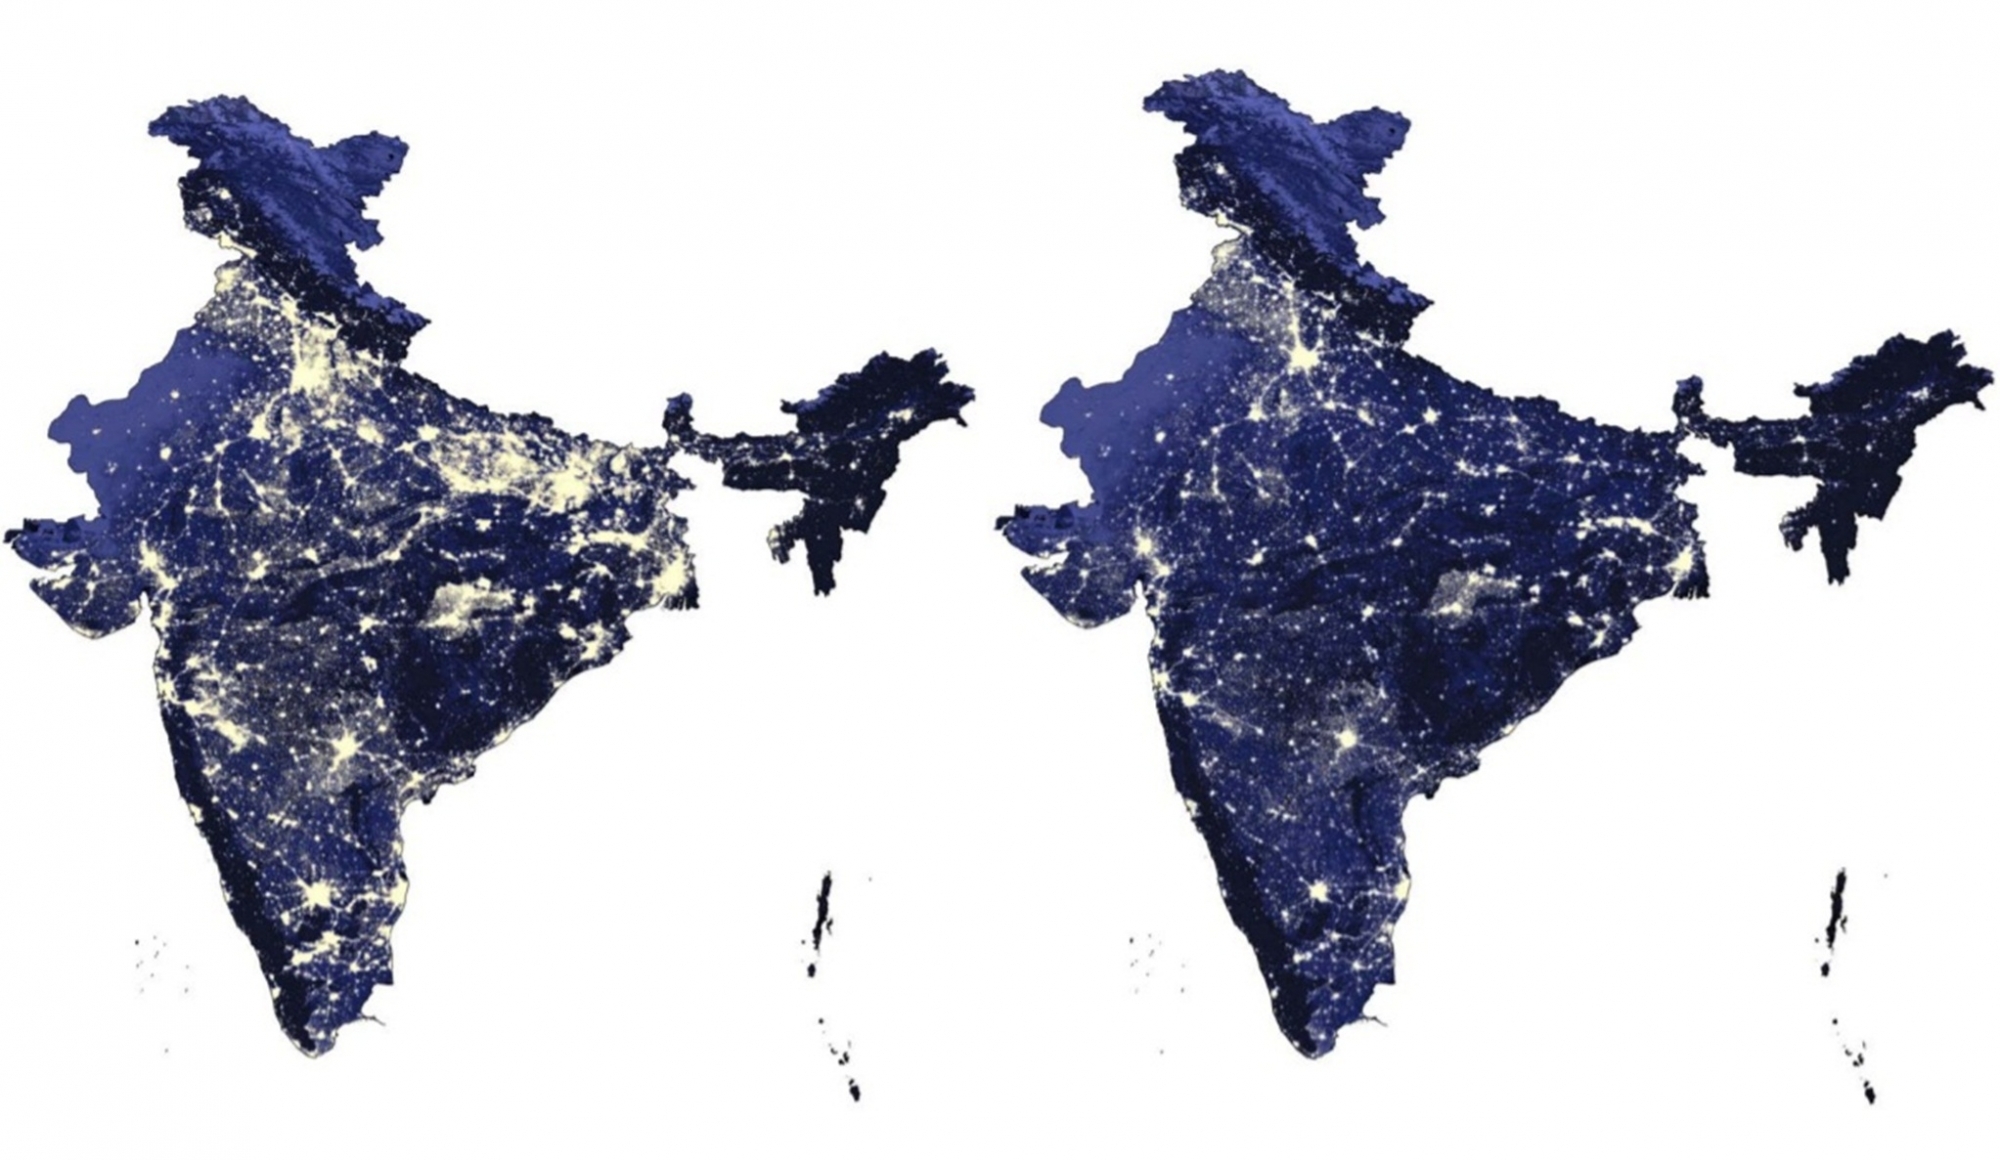 Satellite images used to track economic activity